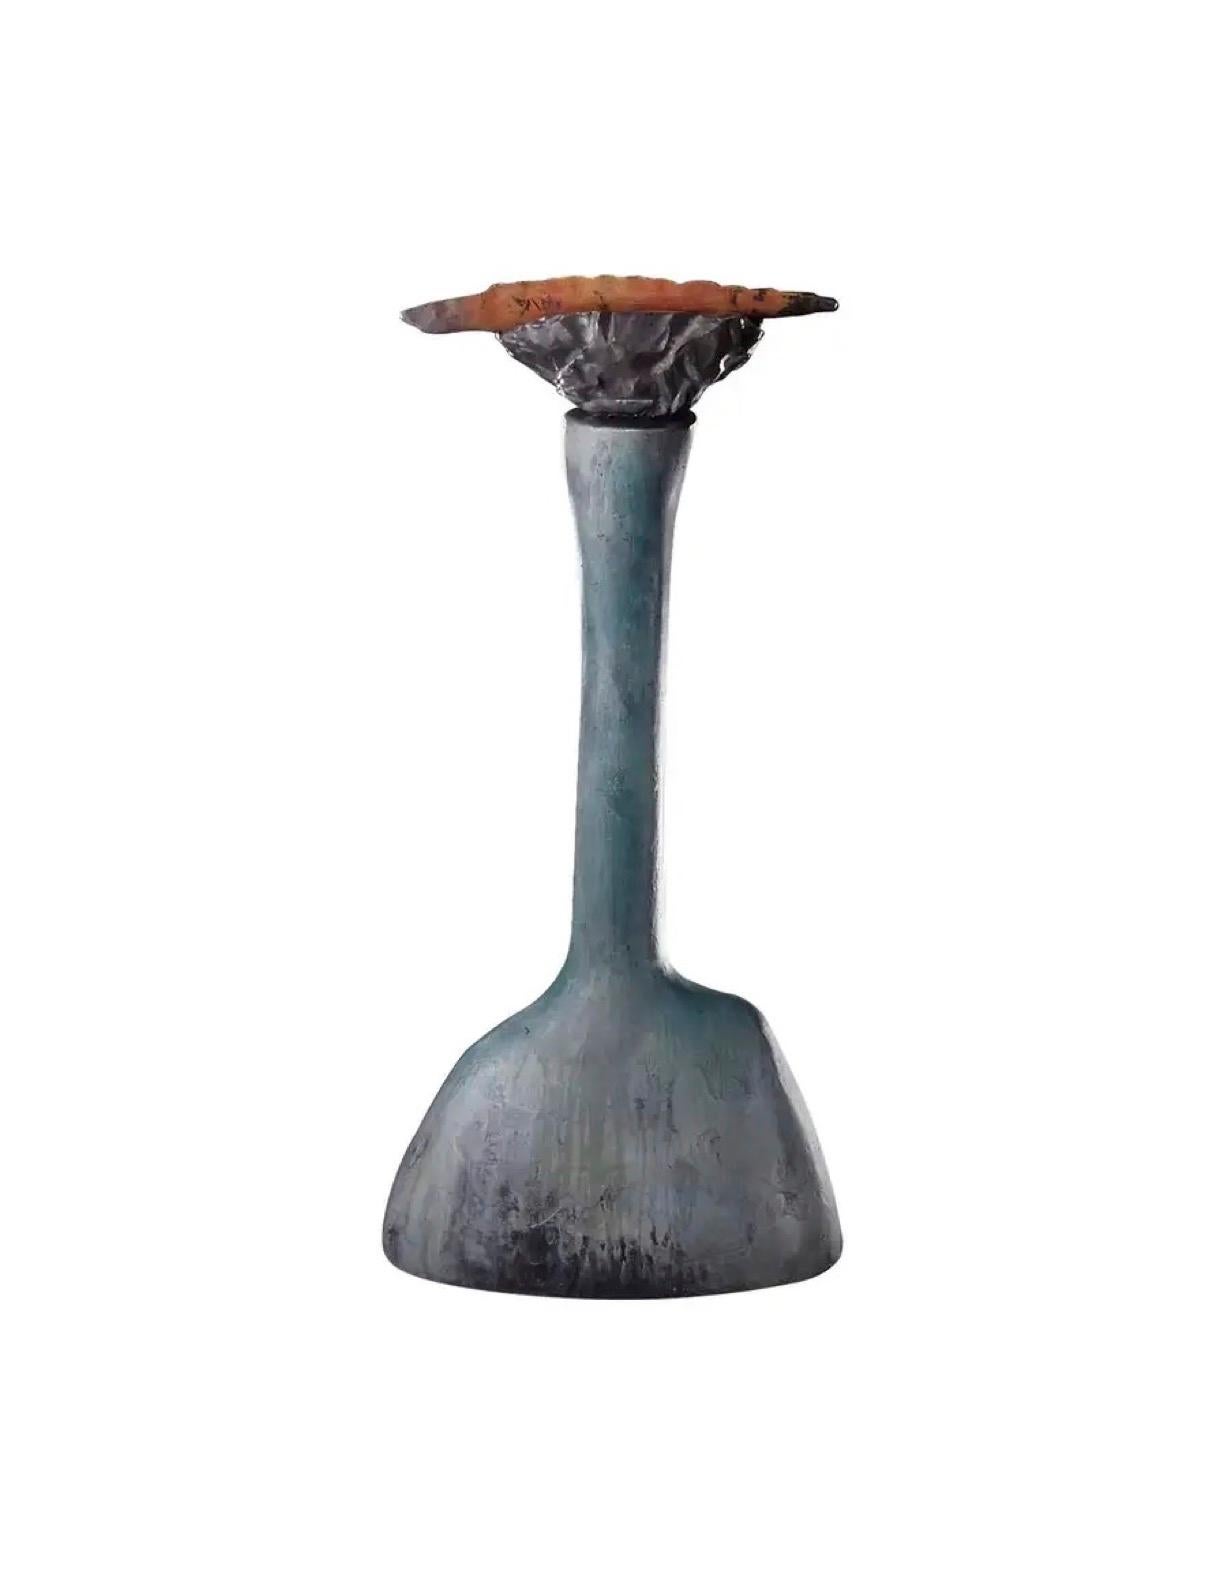 Modern Richard Hirsch Pedestal Bowl with Weapon #16 Ceramic Sculpture, 1997 For Sale